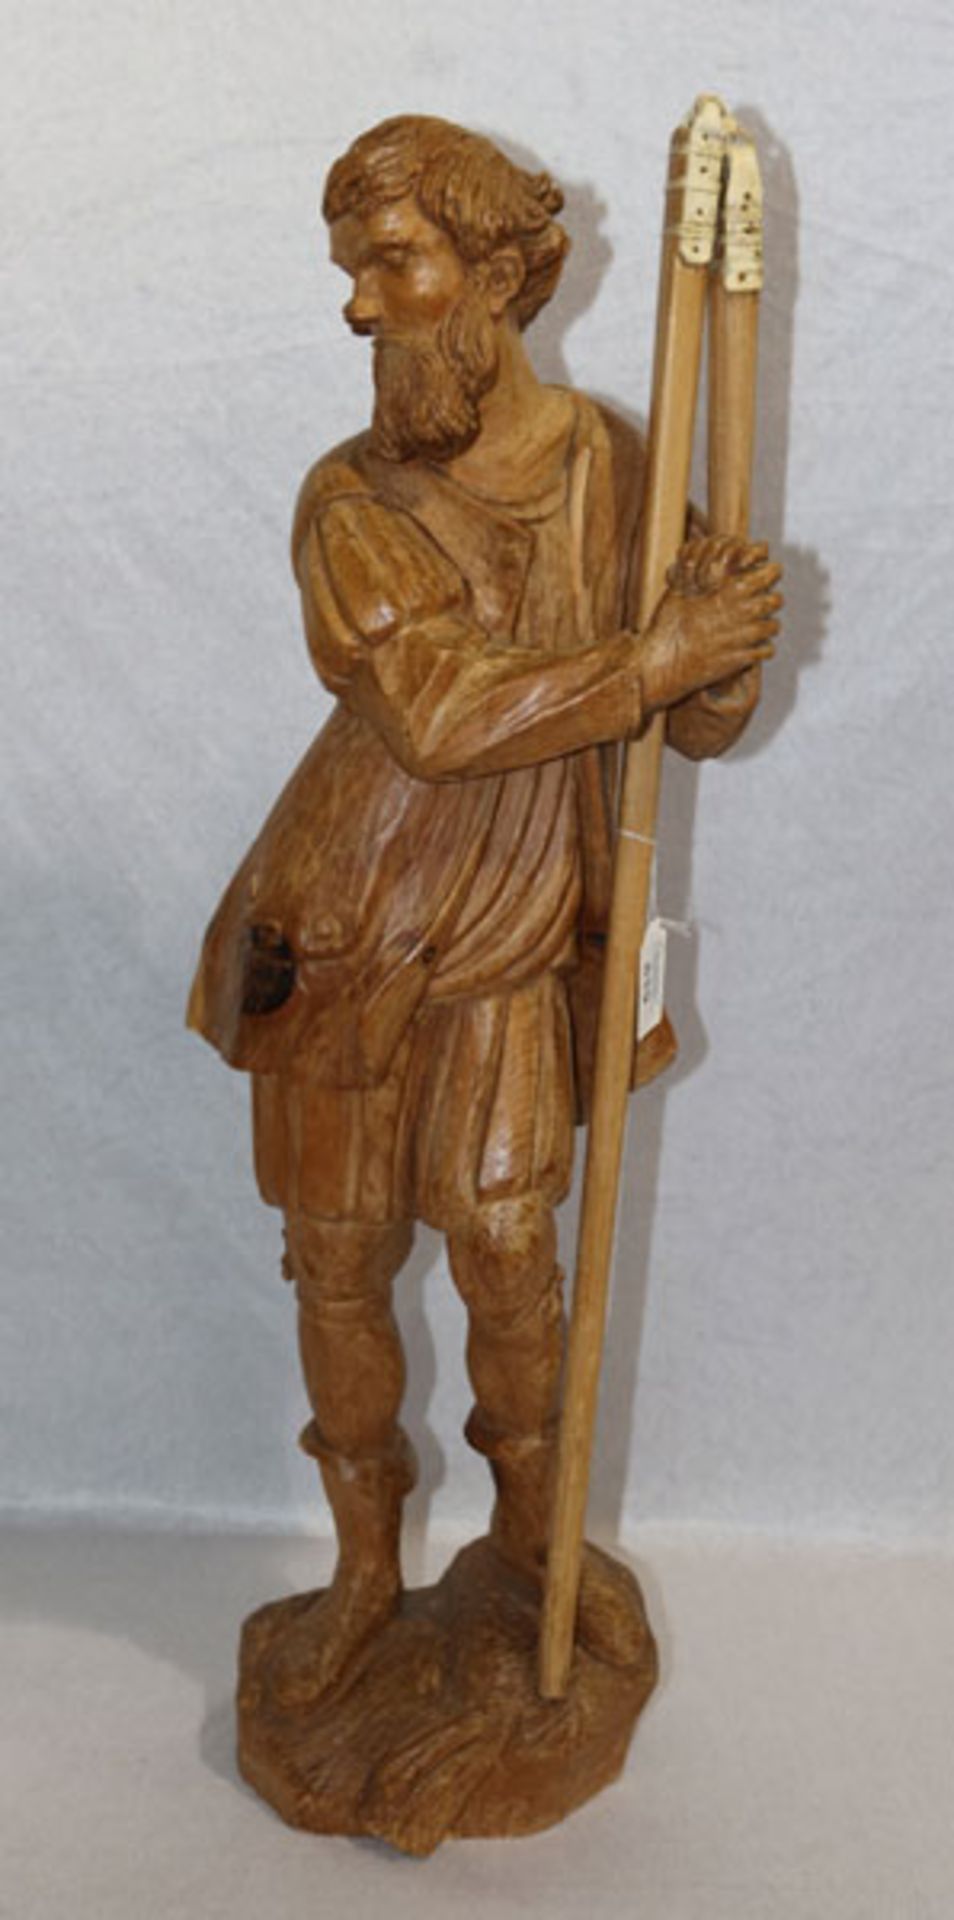 Holz Figurenskulptur 'Bauer mit Dreschflegel', H 78 cm, teils beschädigt